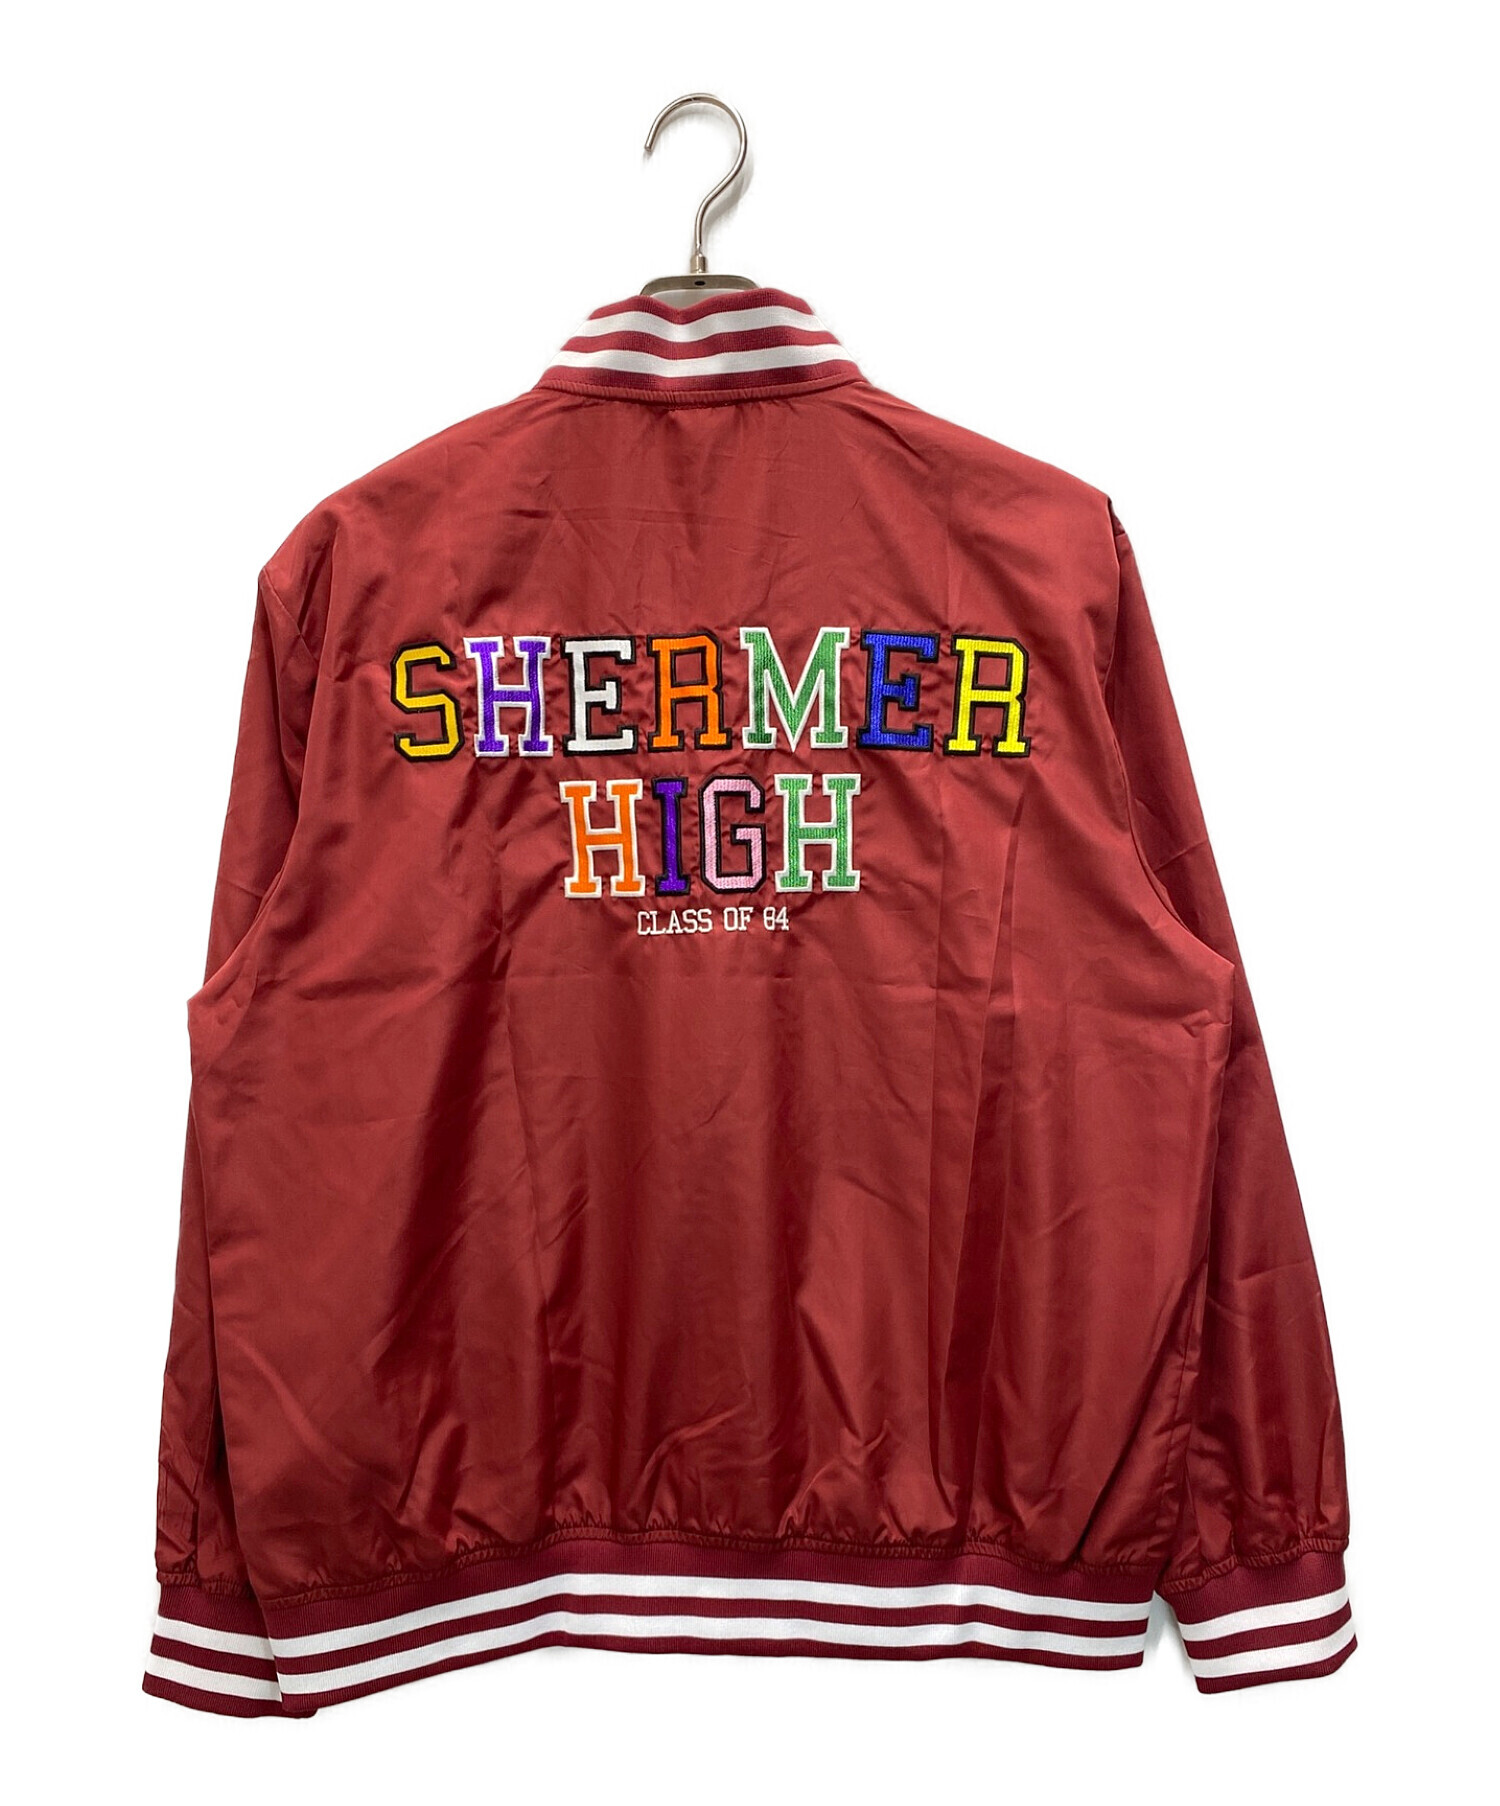 shermer academy winner jacket red - ジャケット・アウター